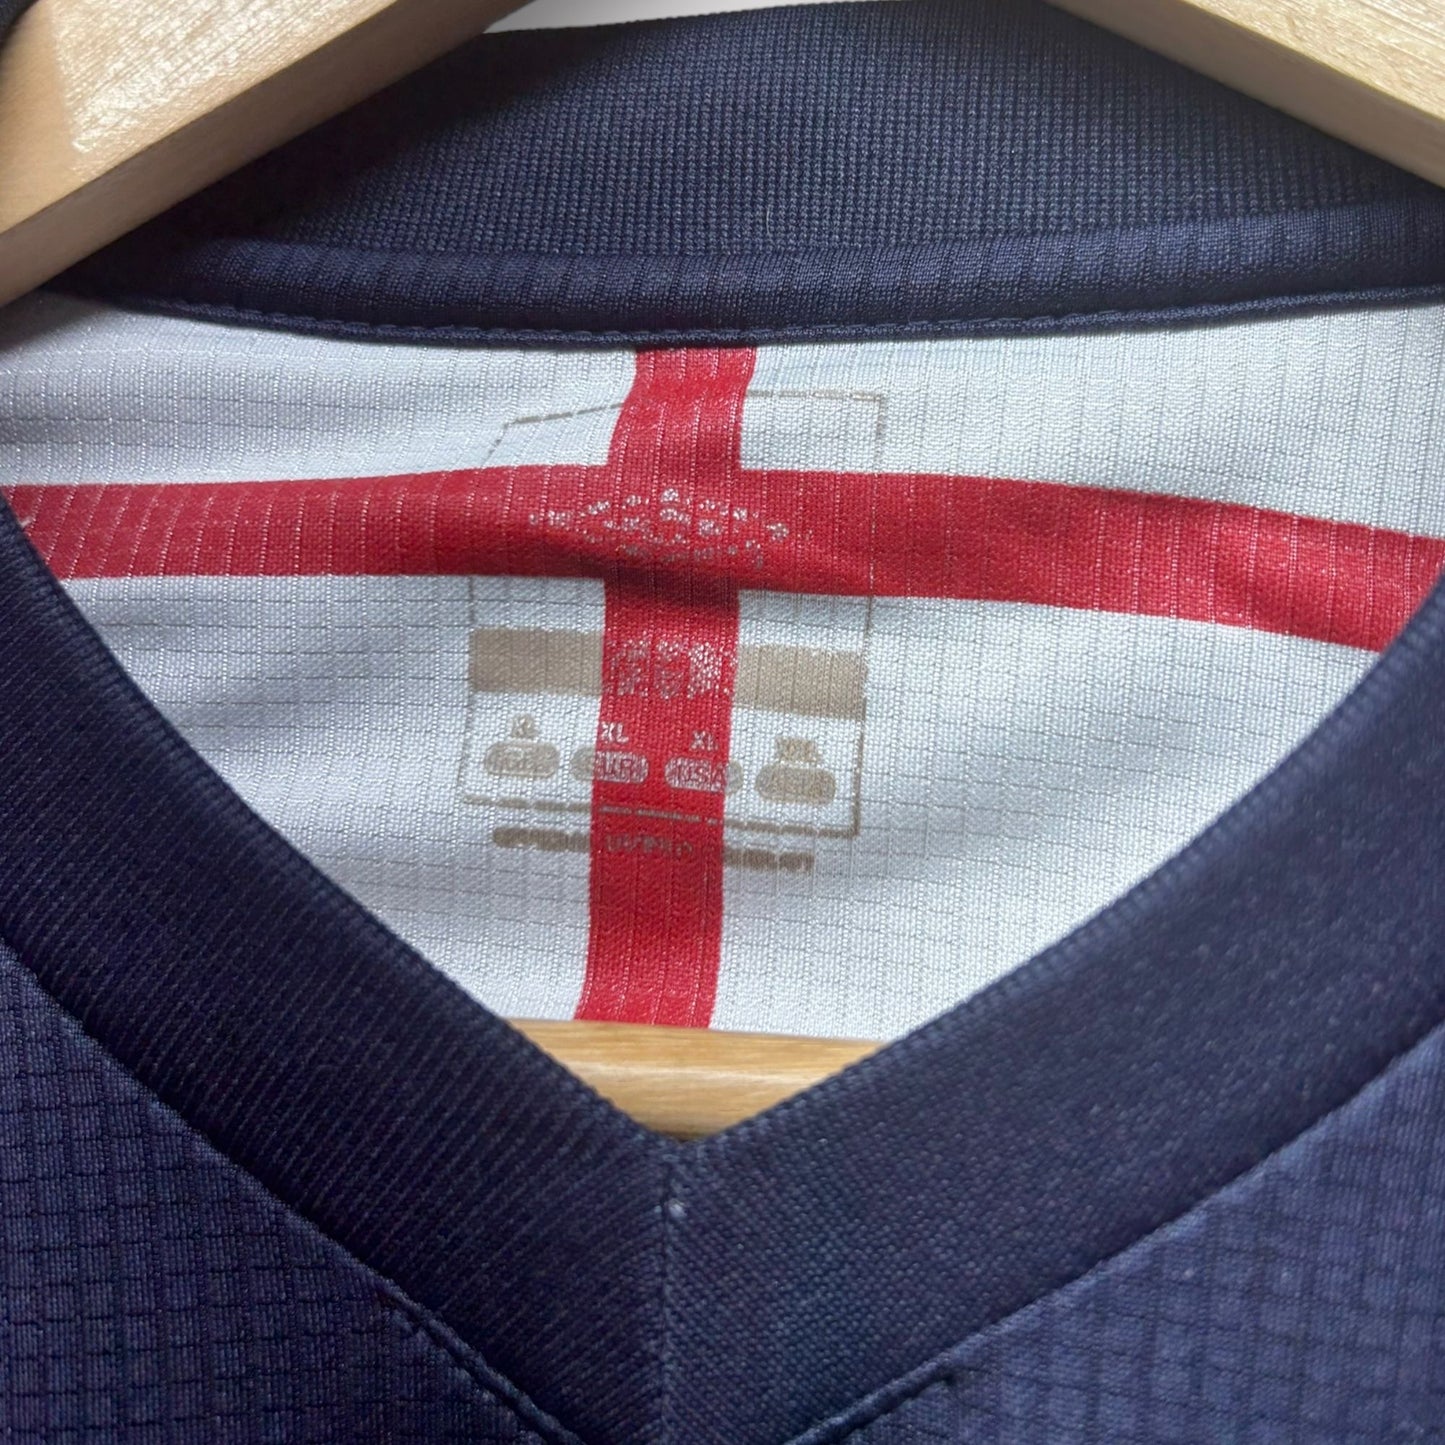 England 2002 Training Shirt (XL)